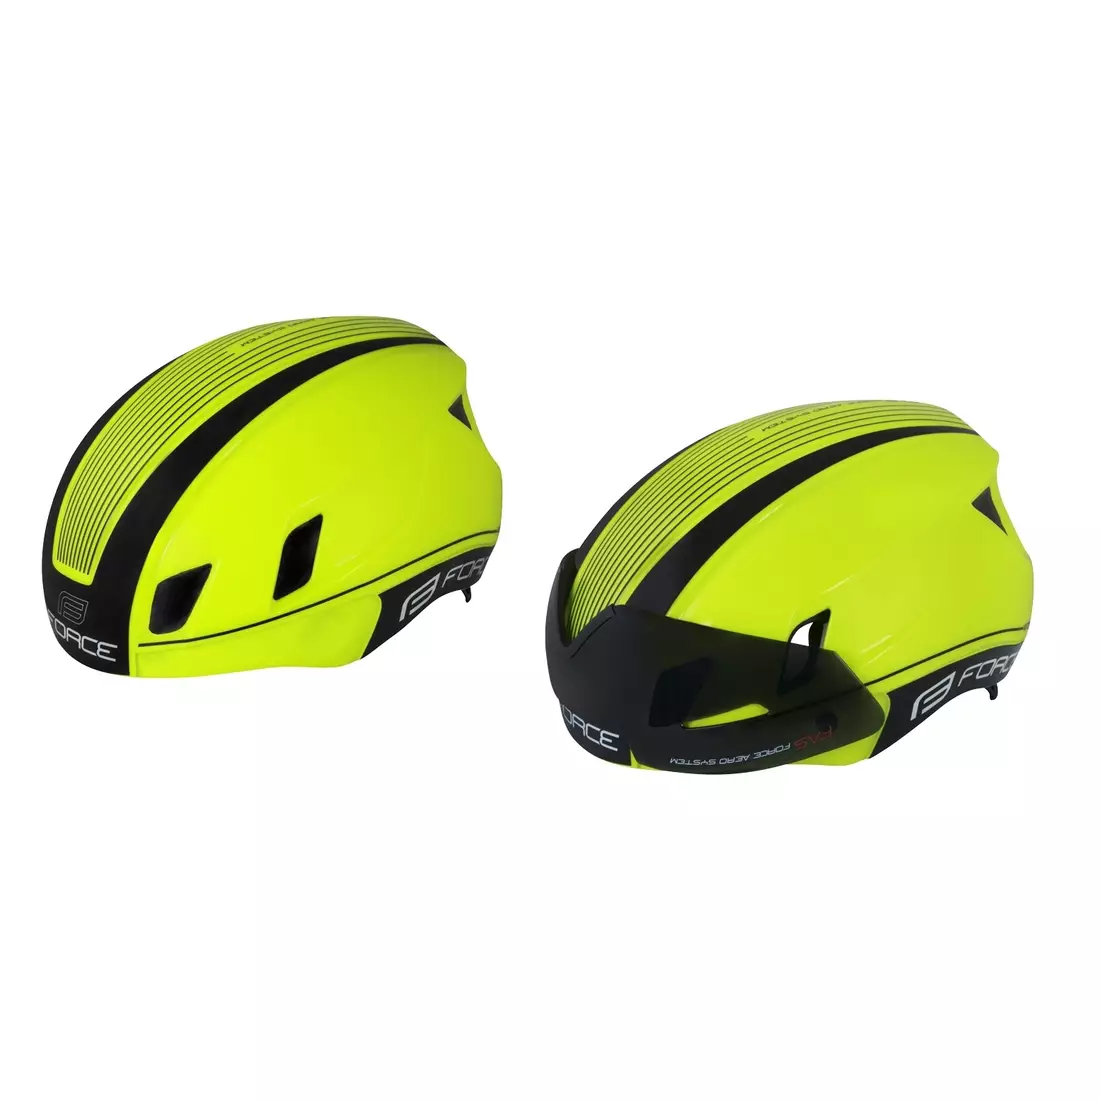 FORCE WORM Bicycle race helmet, fluo 901891